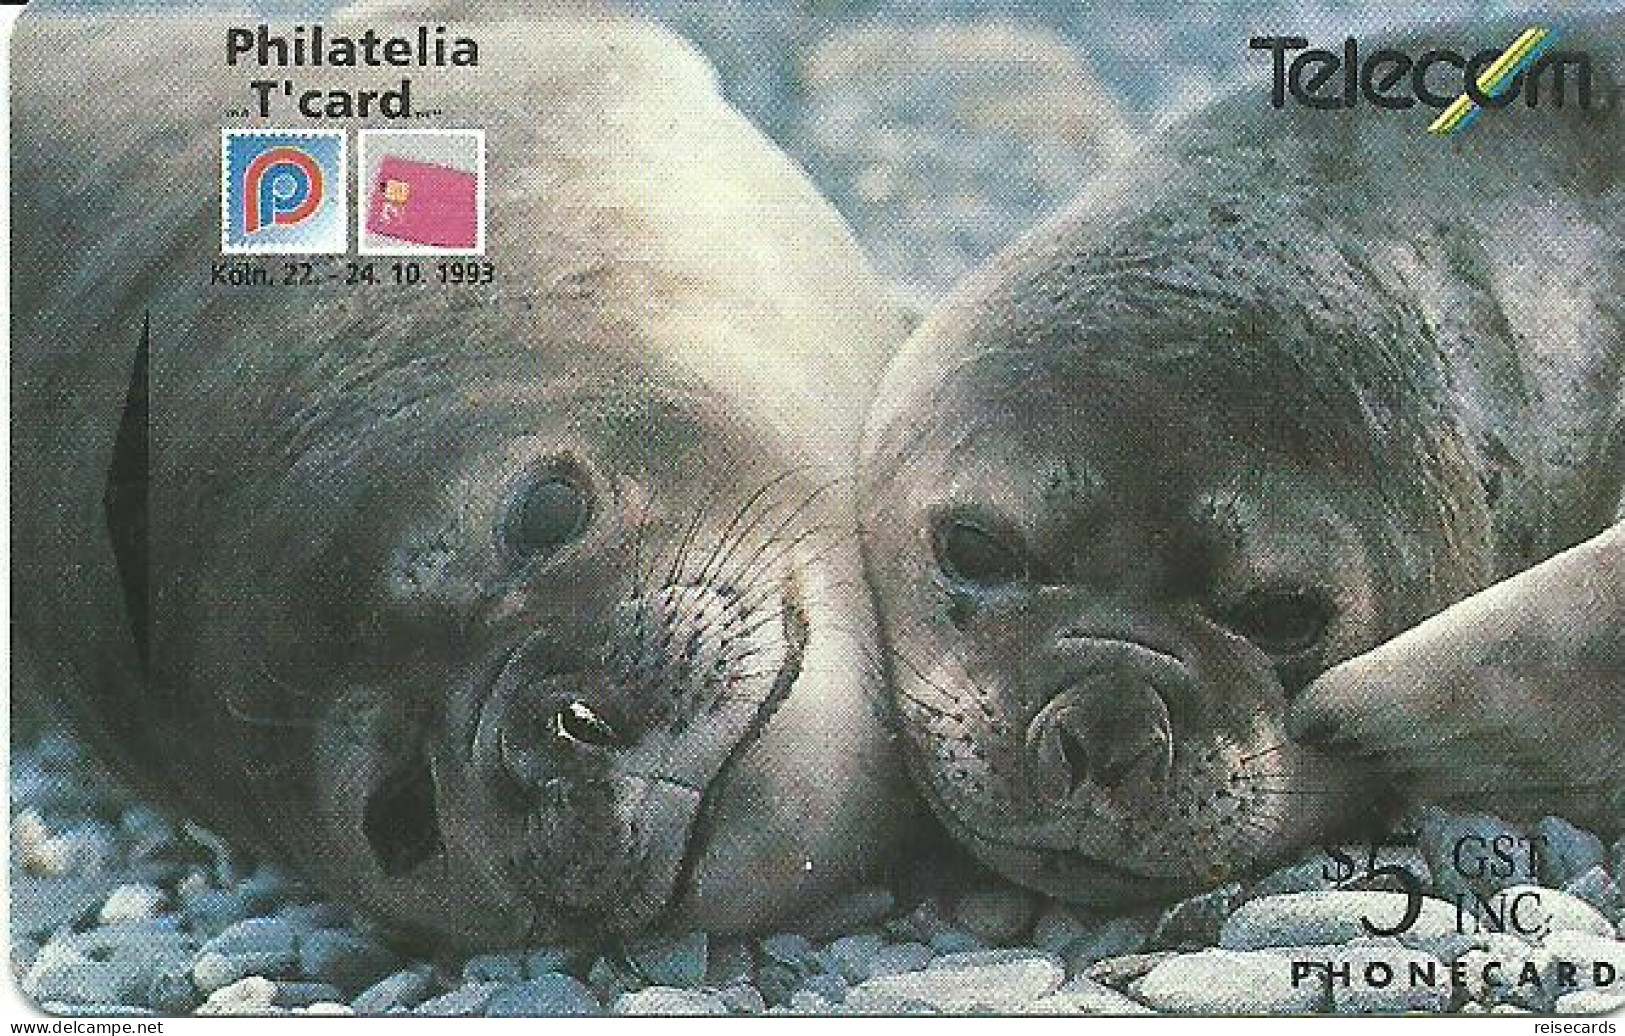 New Zealand: Telecom - 1993 Philatelia And T'card Exhibion Köln 93, Fur Seals - Neuseeland